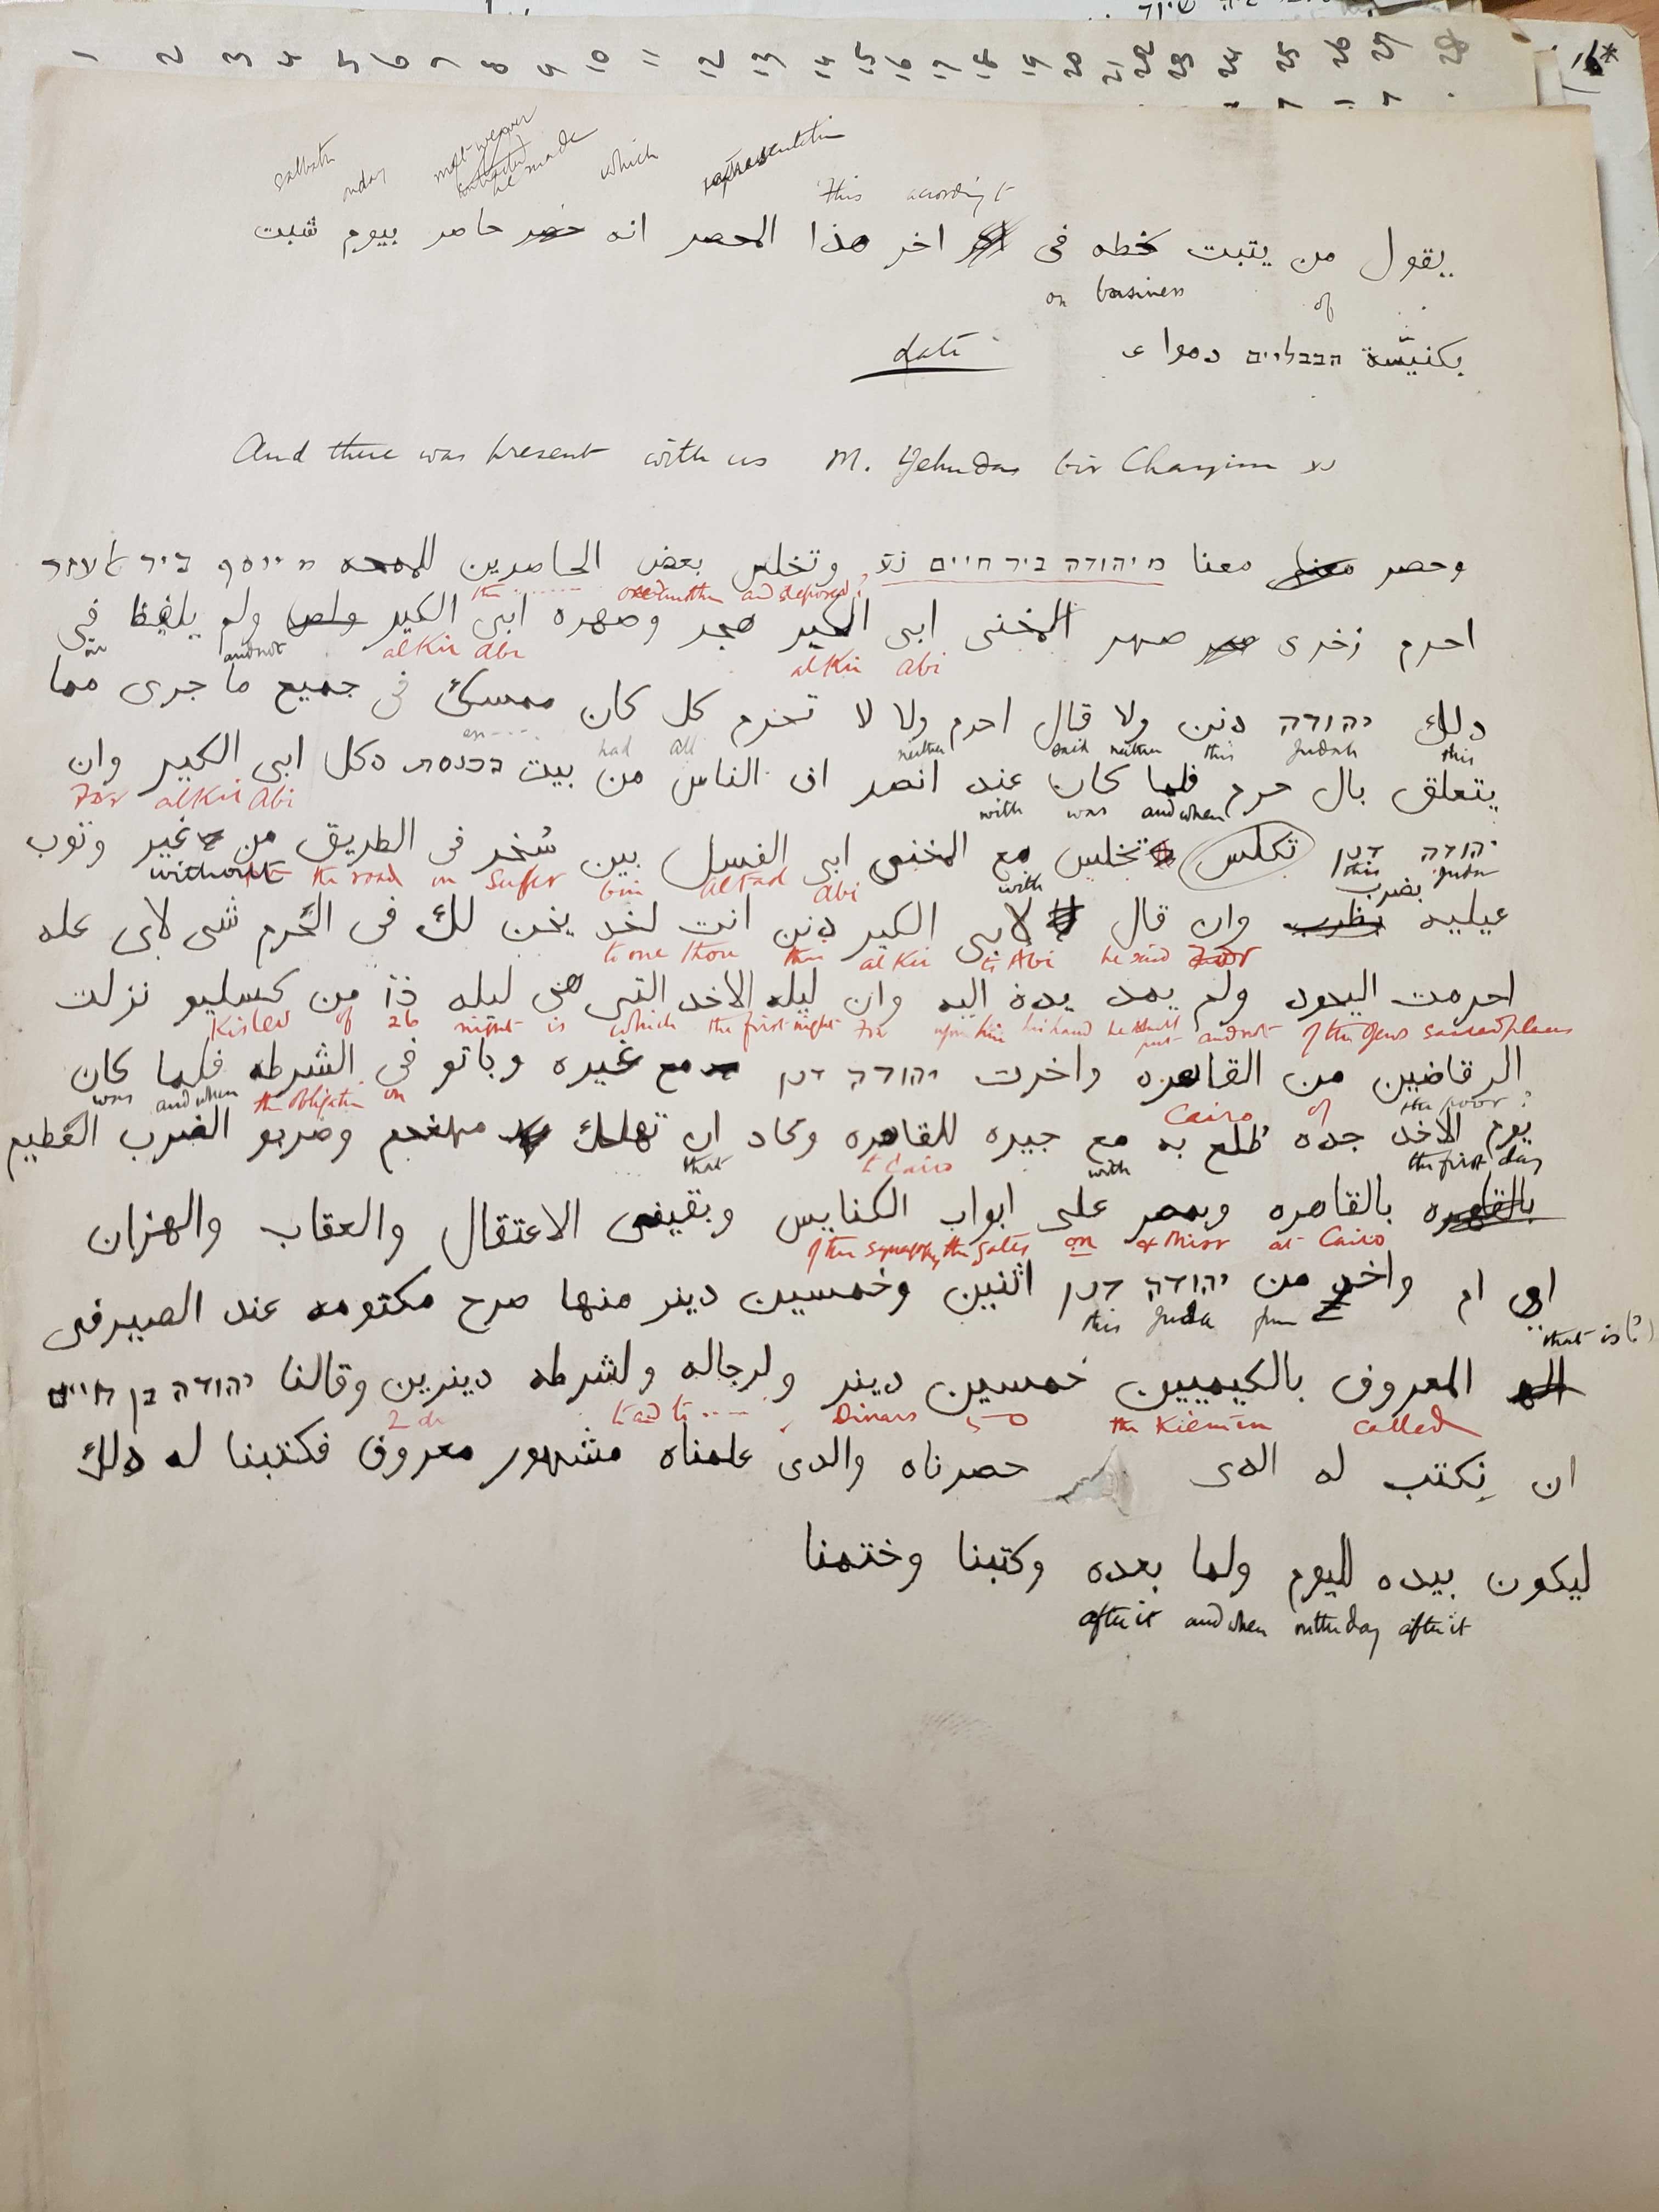 Worman's Arabic translation notes